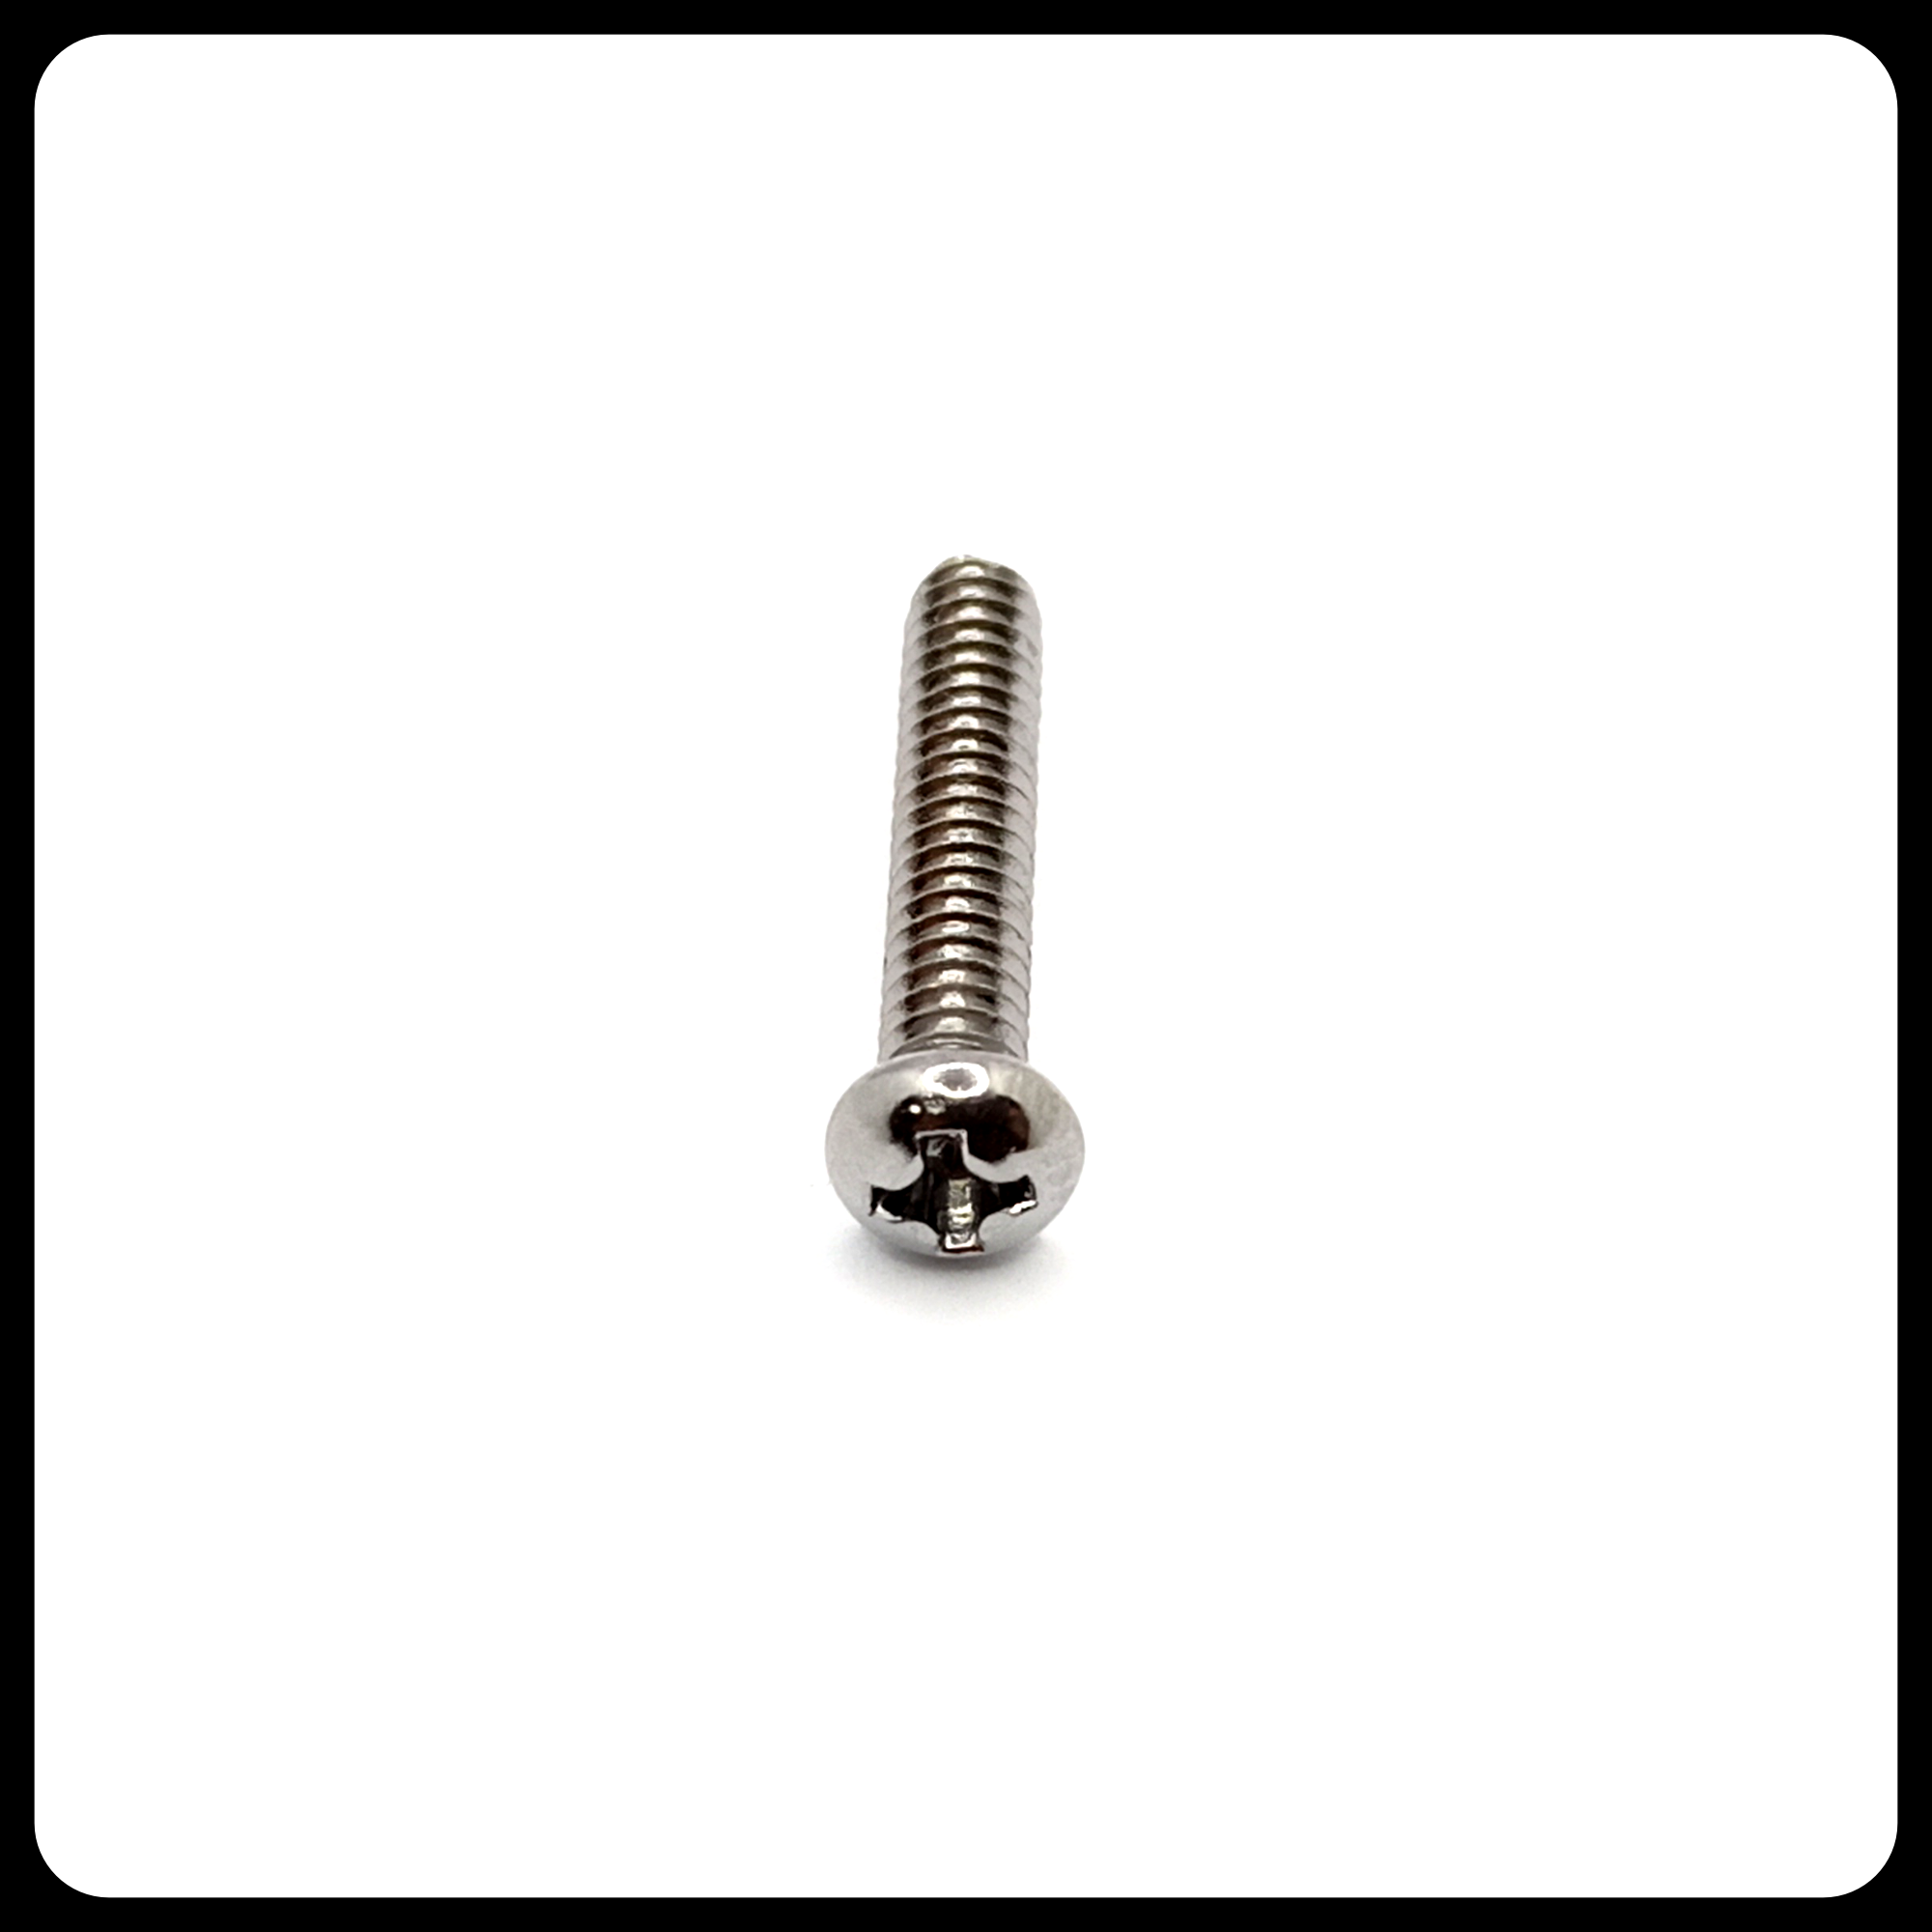 Screw 6-32 size, Phillips round head, long thread  3/4" (19.05mm)